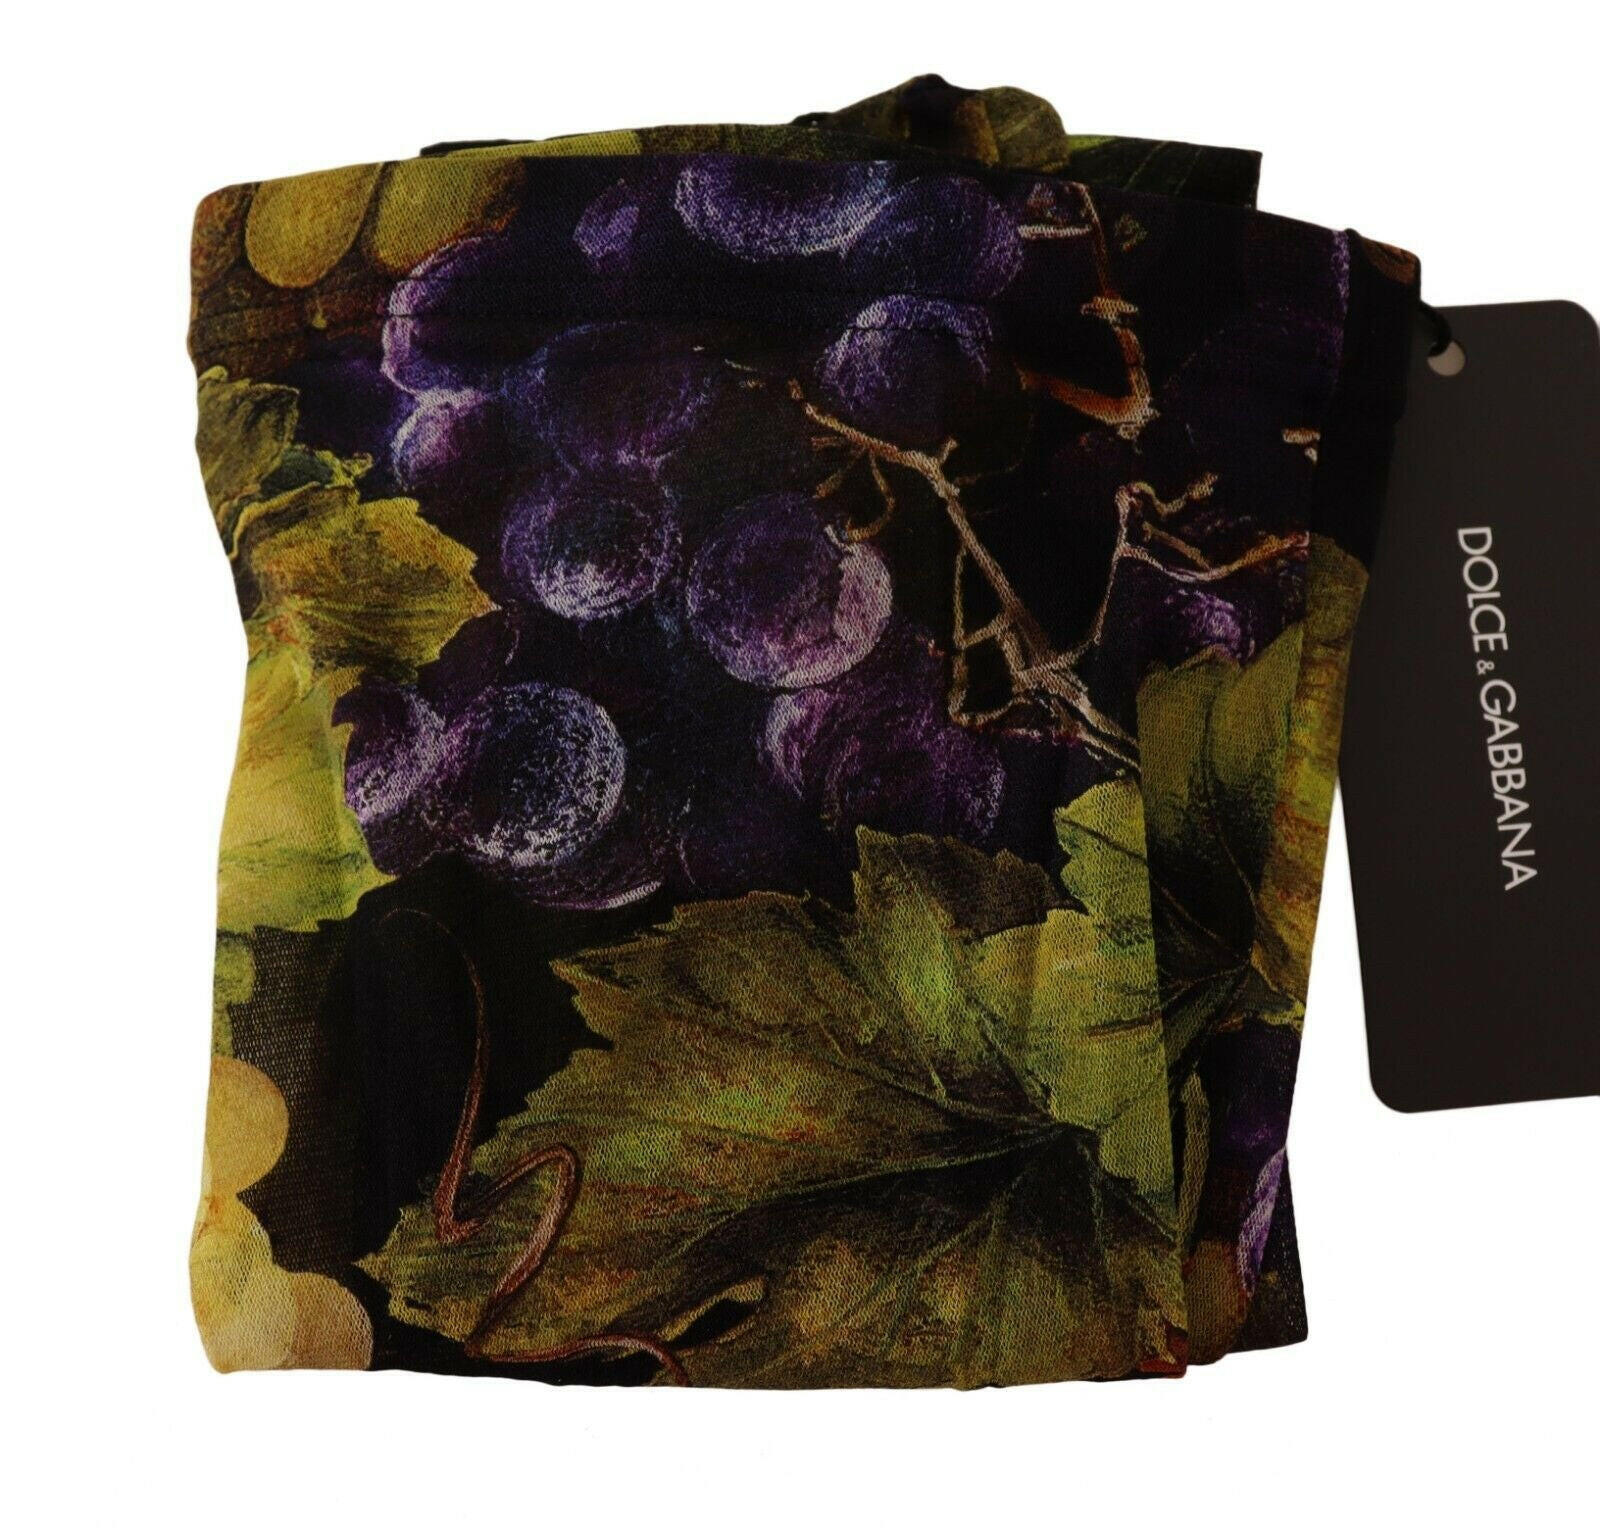 Dolce & Gabbana Black Grapes Print Stockings Tights - GENUINE AUTHENTIC BRAND LLC  